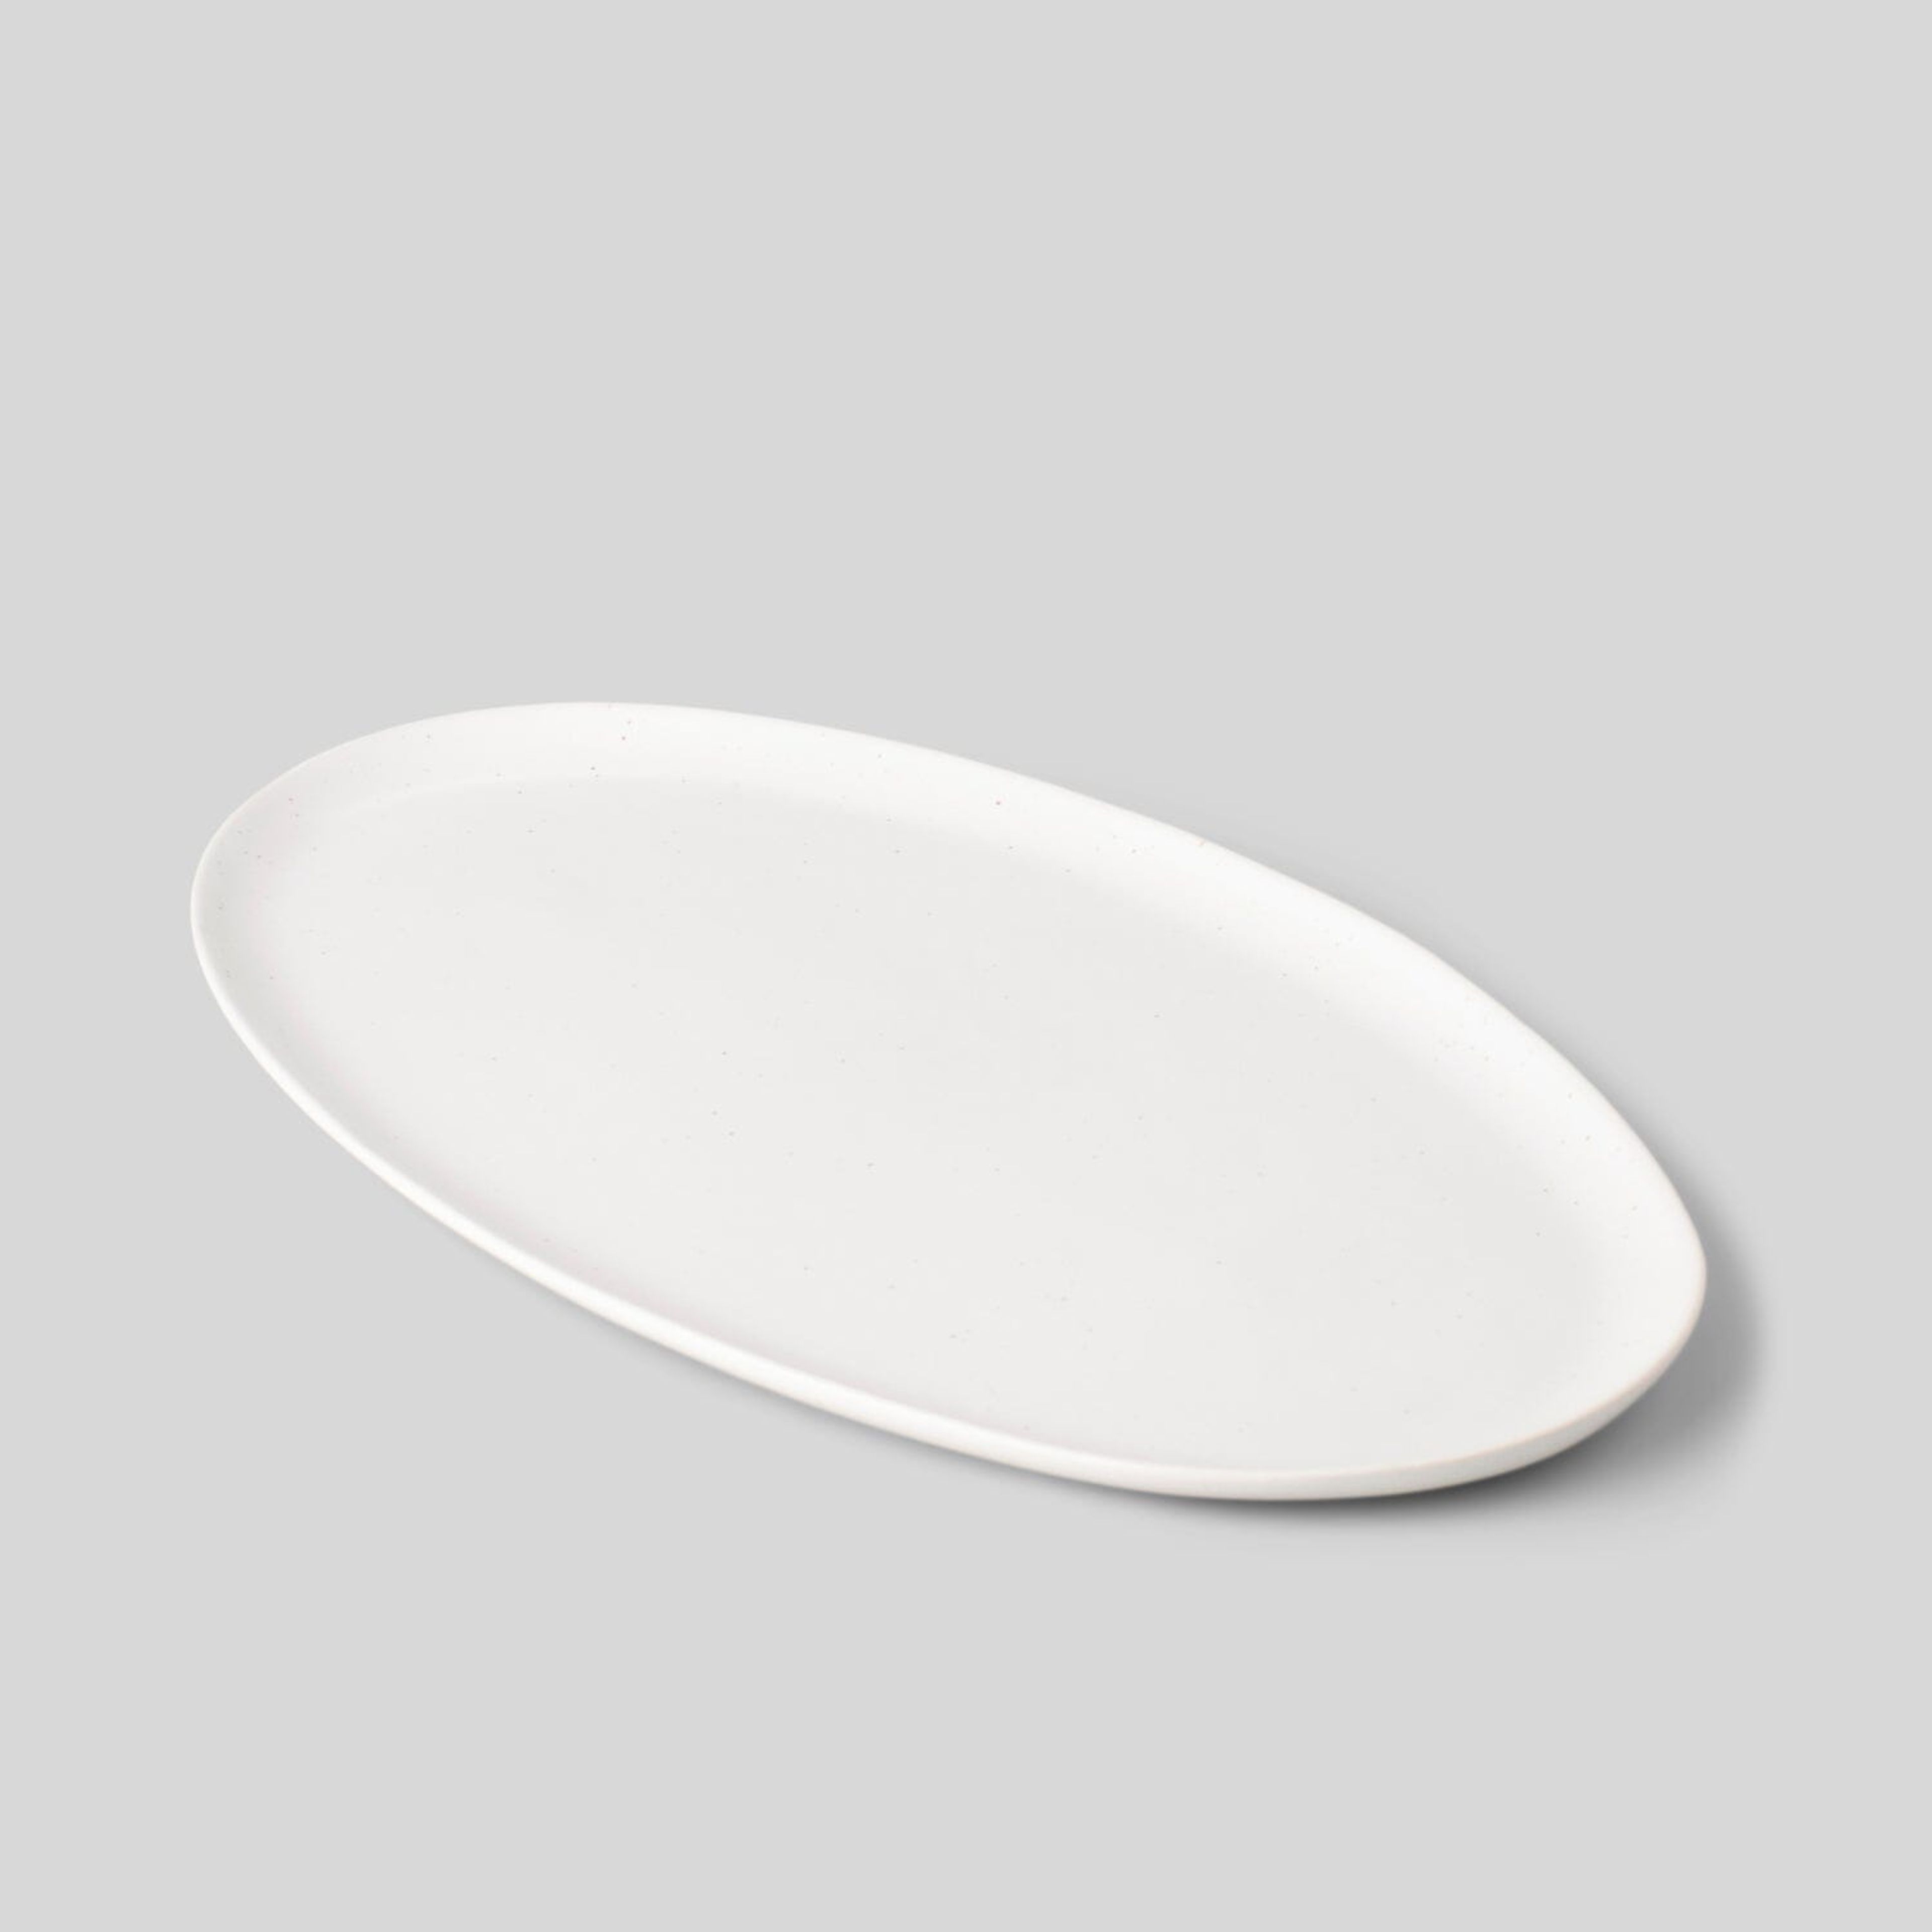 The Oval Serving Platter